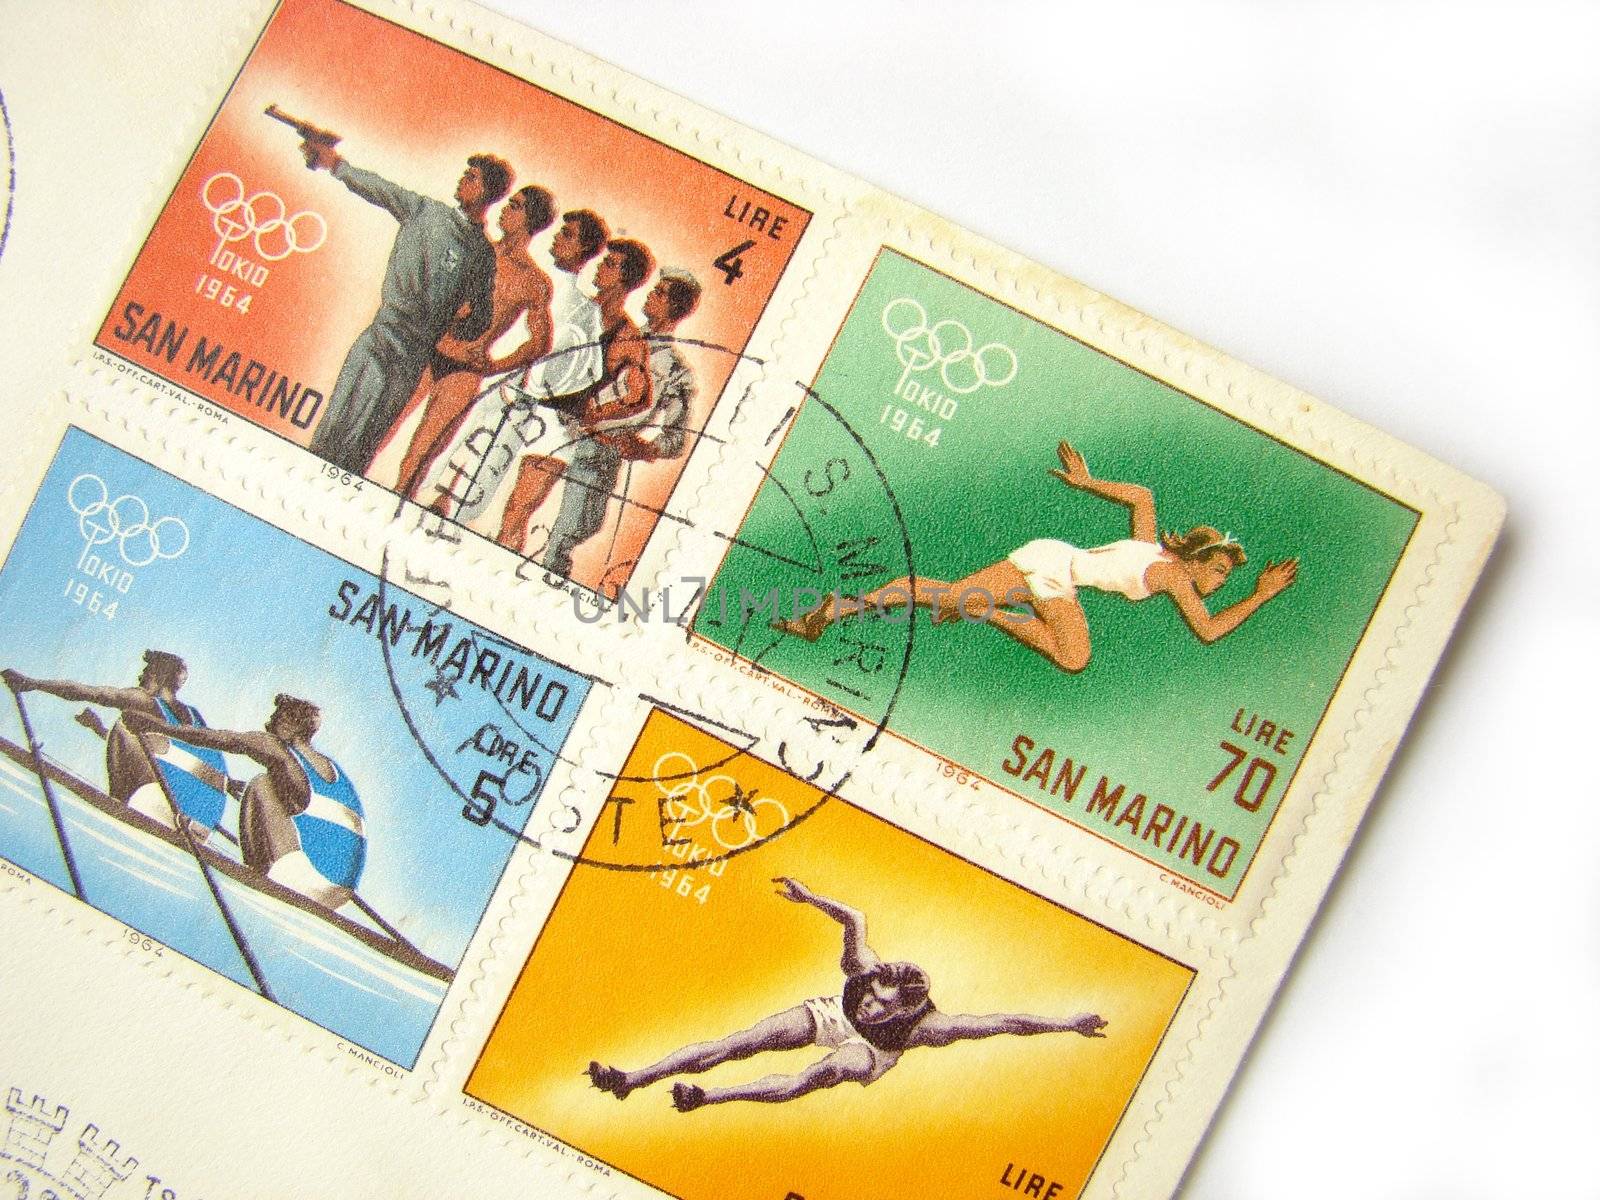 San Marino postage stamps on envelope, on white background